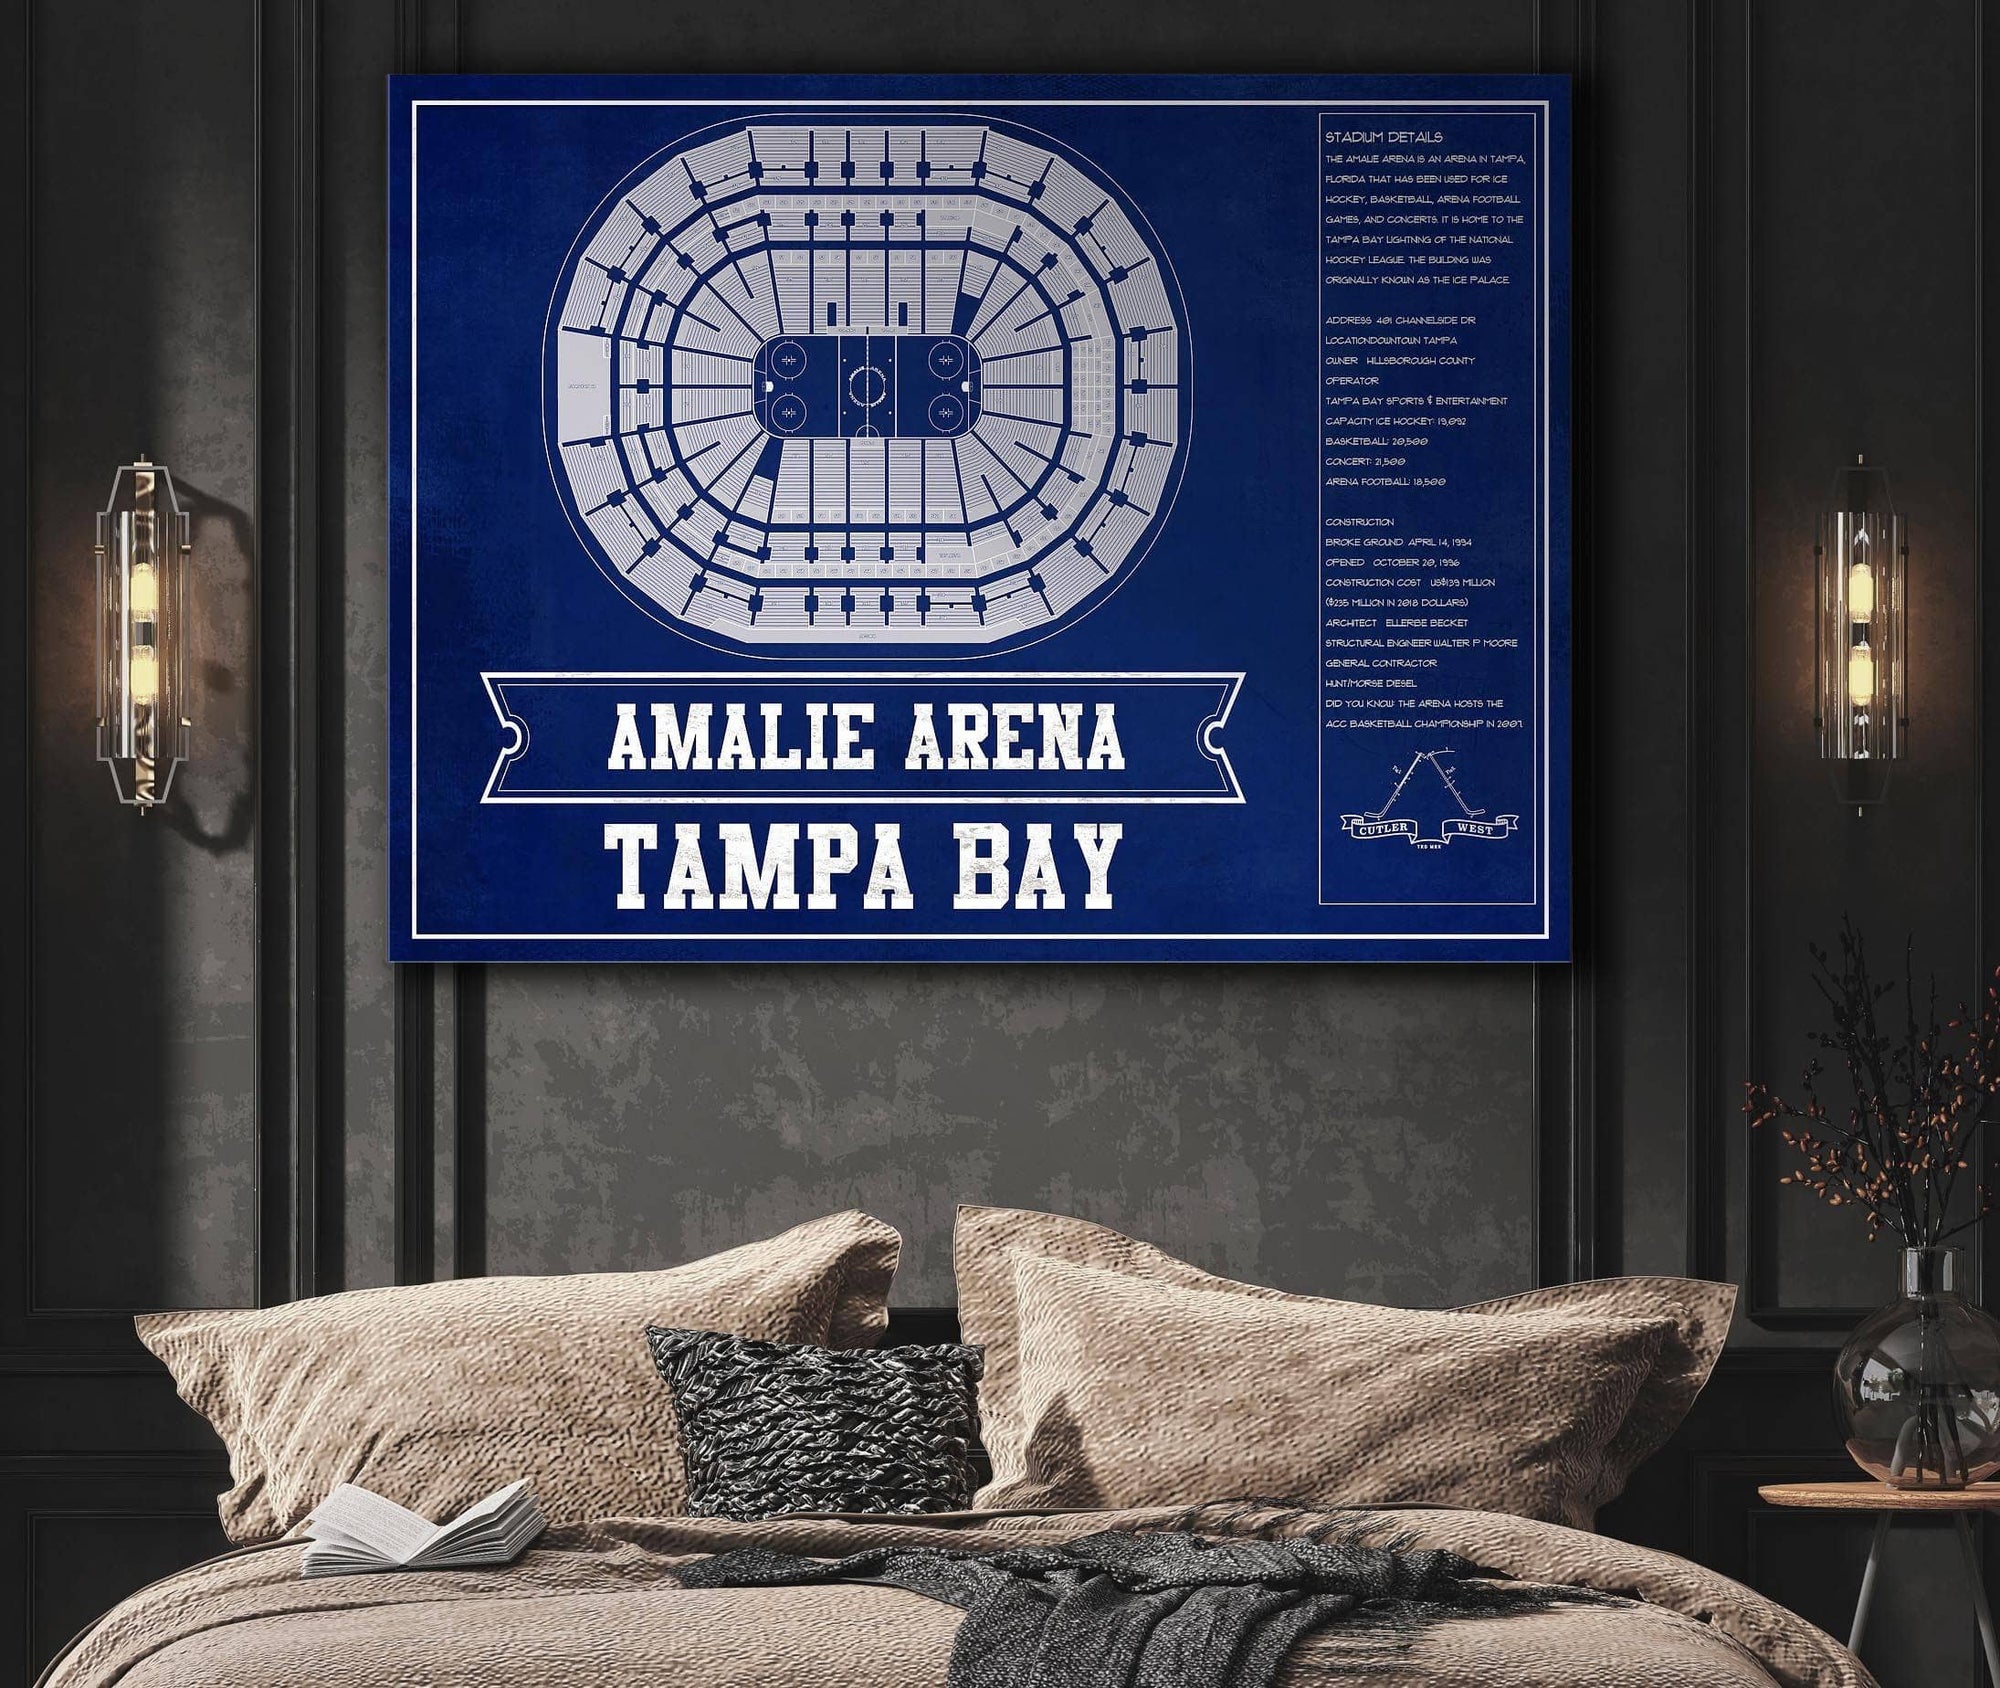 Tampa Bay Lightning Amalie Arena Seating Chart - Vintage Hockey Print